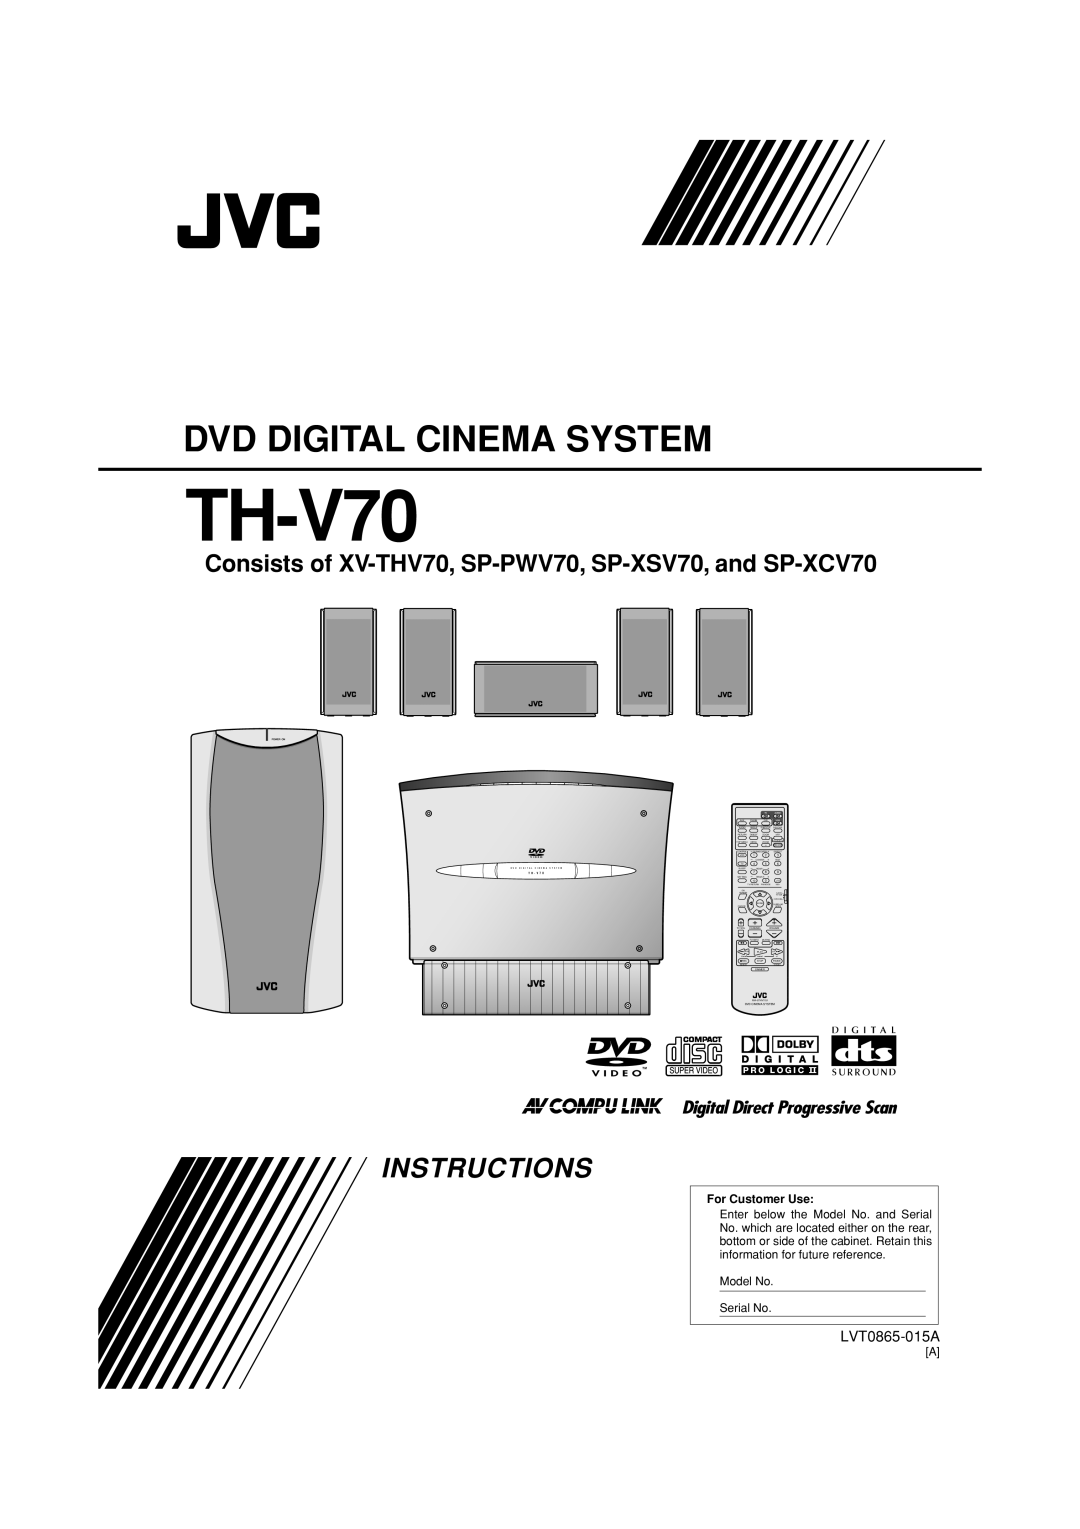 JVC manual Consists of XV-THV70, SP-PWV70, SP-XSV70, and SP-XCV70, TH-V70, Dvd Digital Cinema System, Instructions 